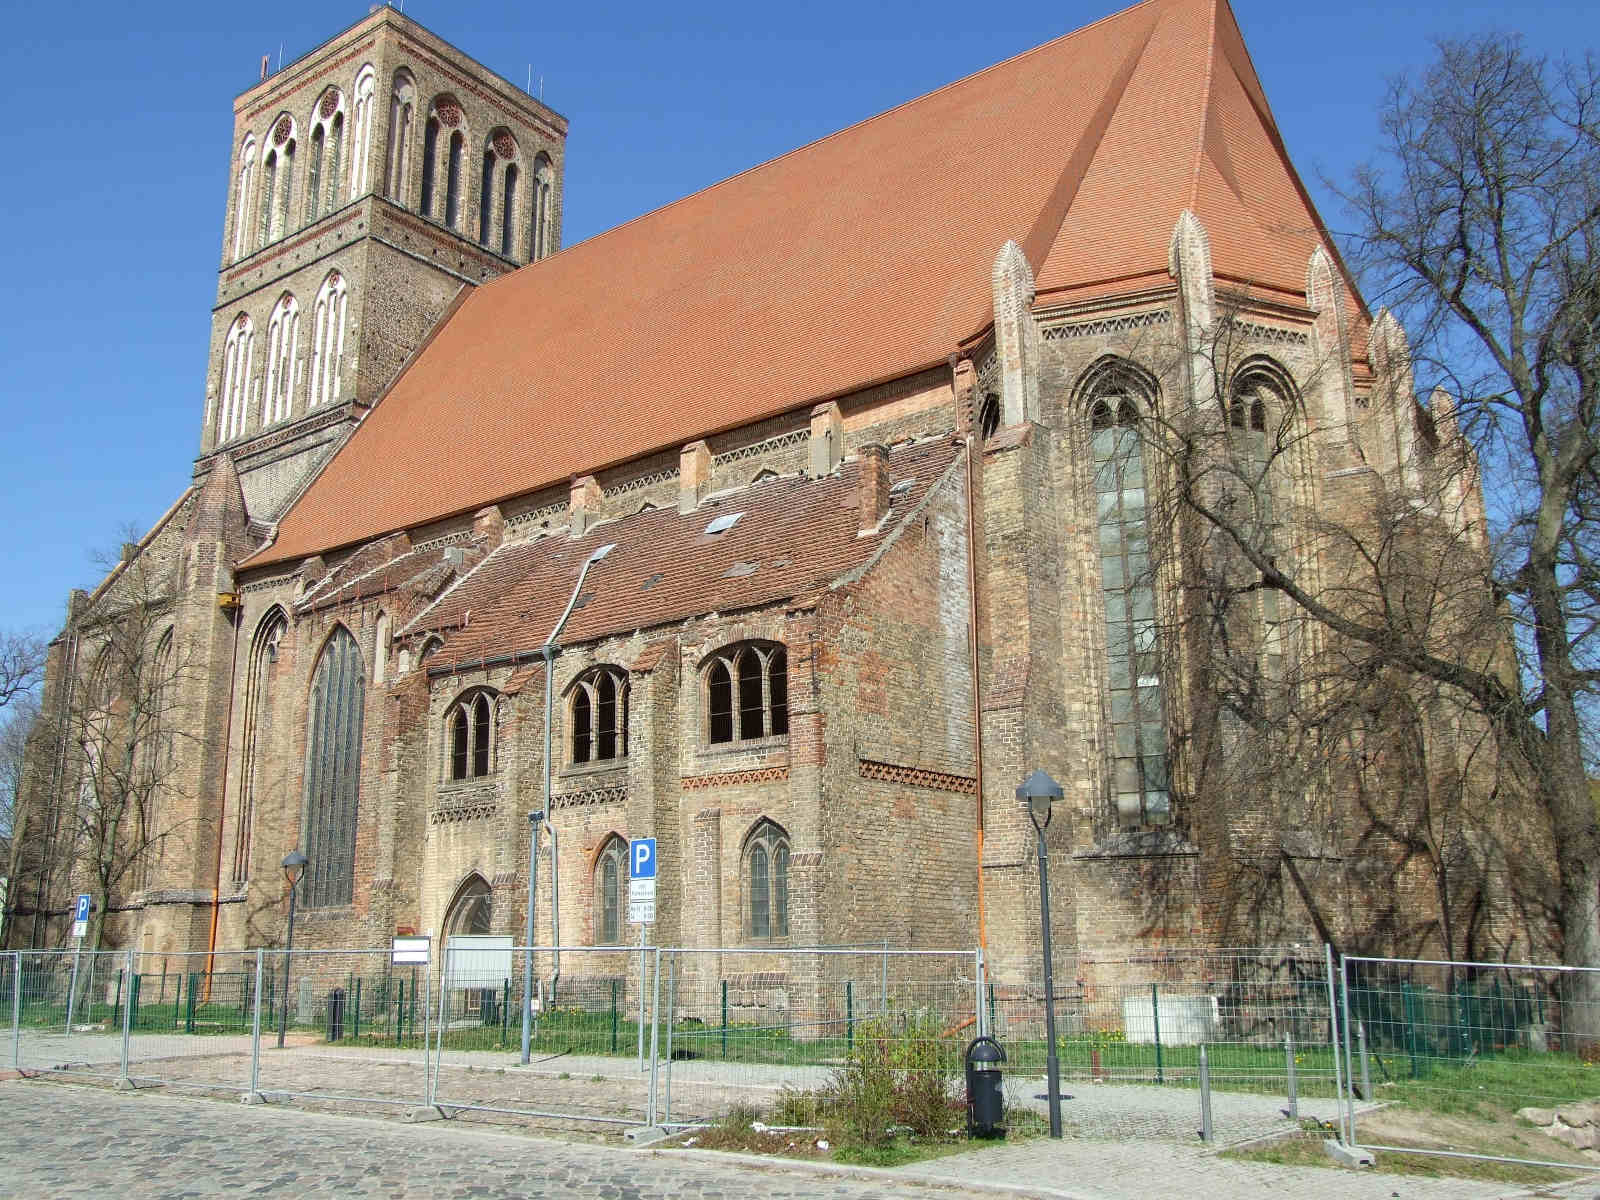 St. Nicholas' Church, Anklam